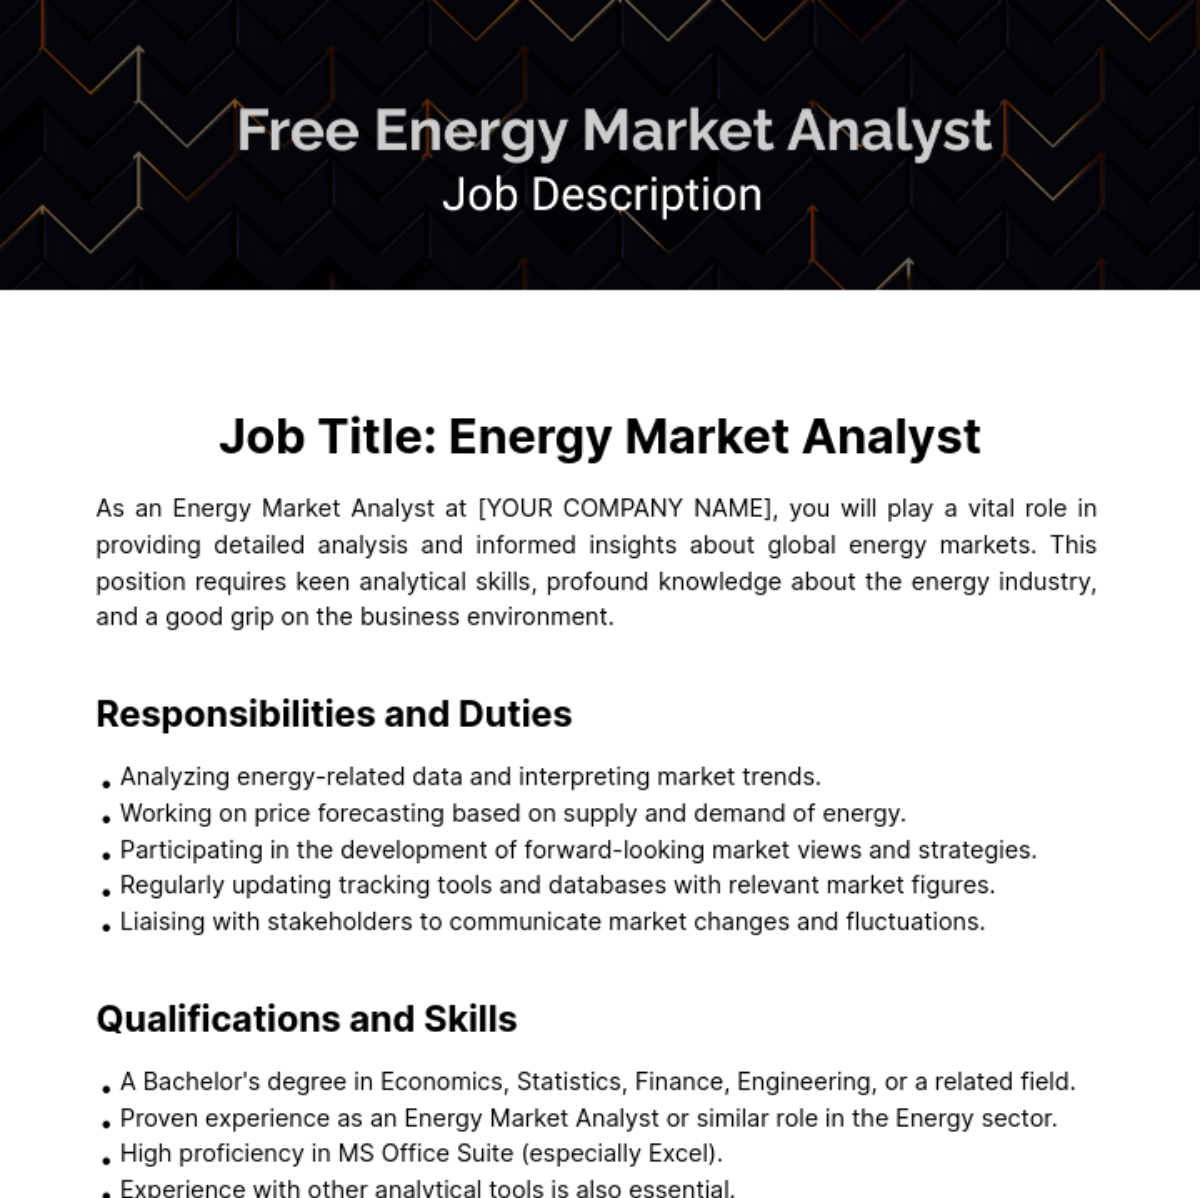 Free Energy Market Analyst Job Description Template